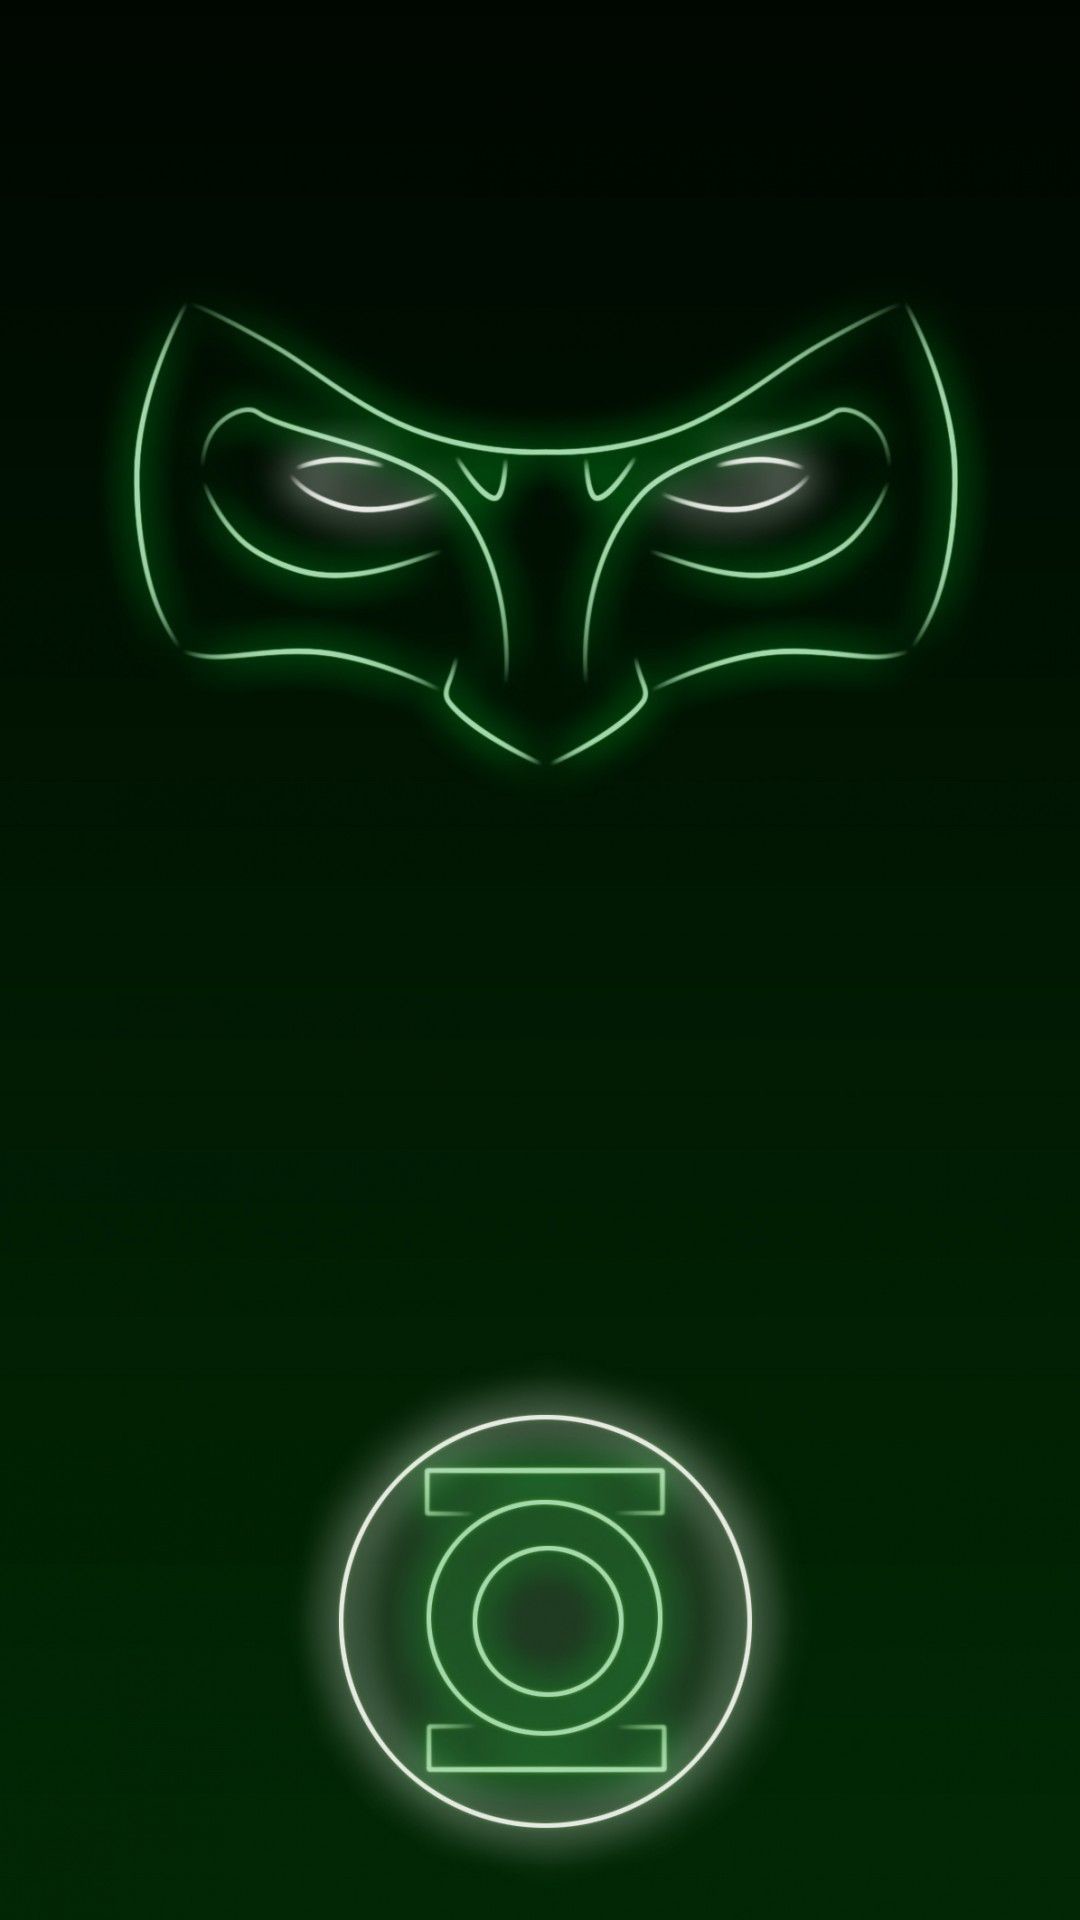 1080x1920 Download Neon Light Hero Green Lantern 1080 x 1920 Wallpapers - 4644331 -  neon light superhero comics dccomics green lantern | mobile9